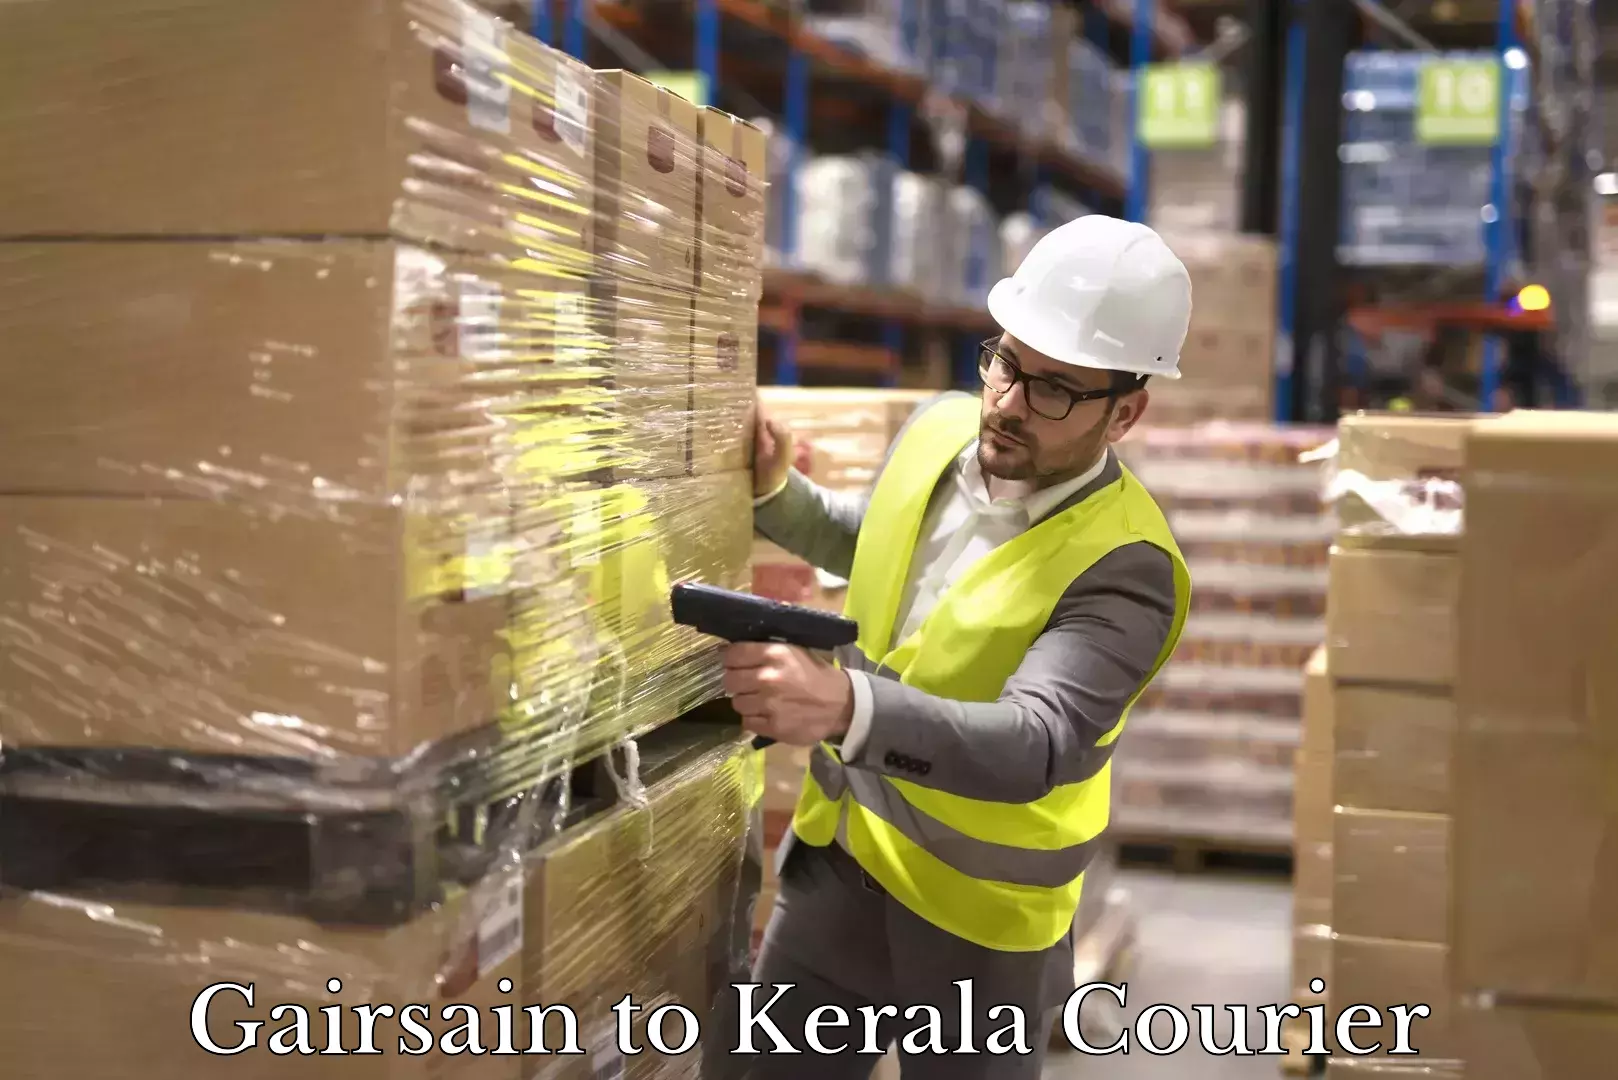 Courier service comparison Gairsain to Kerala